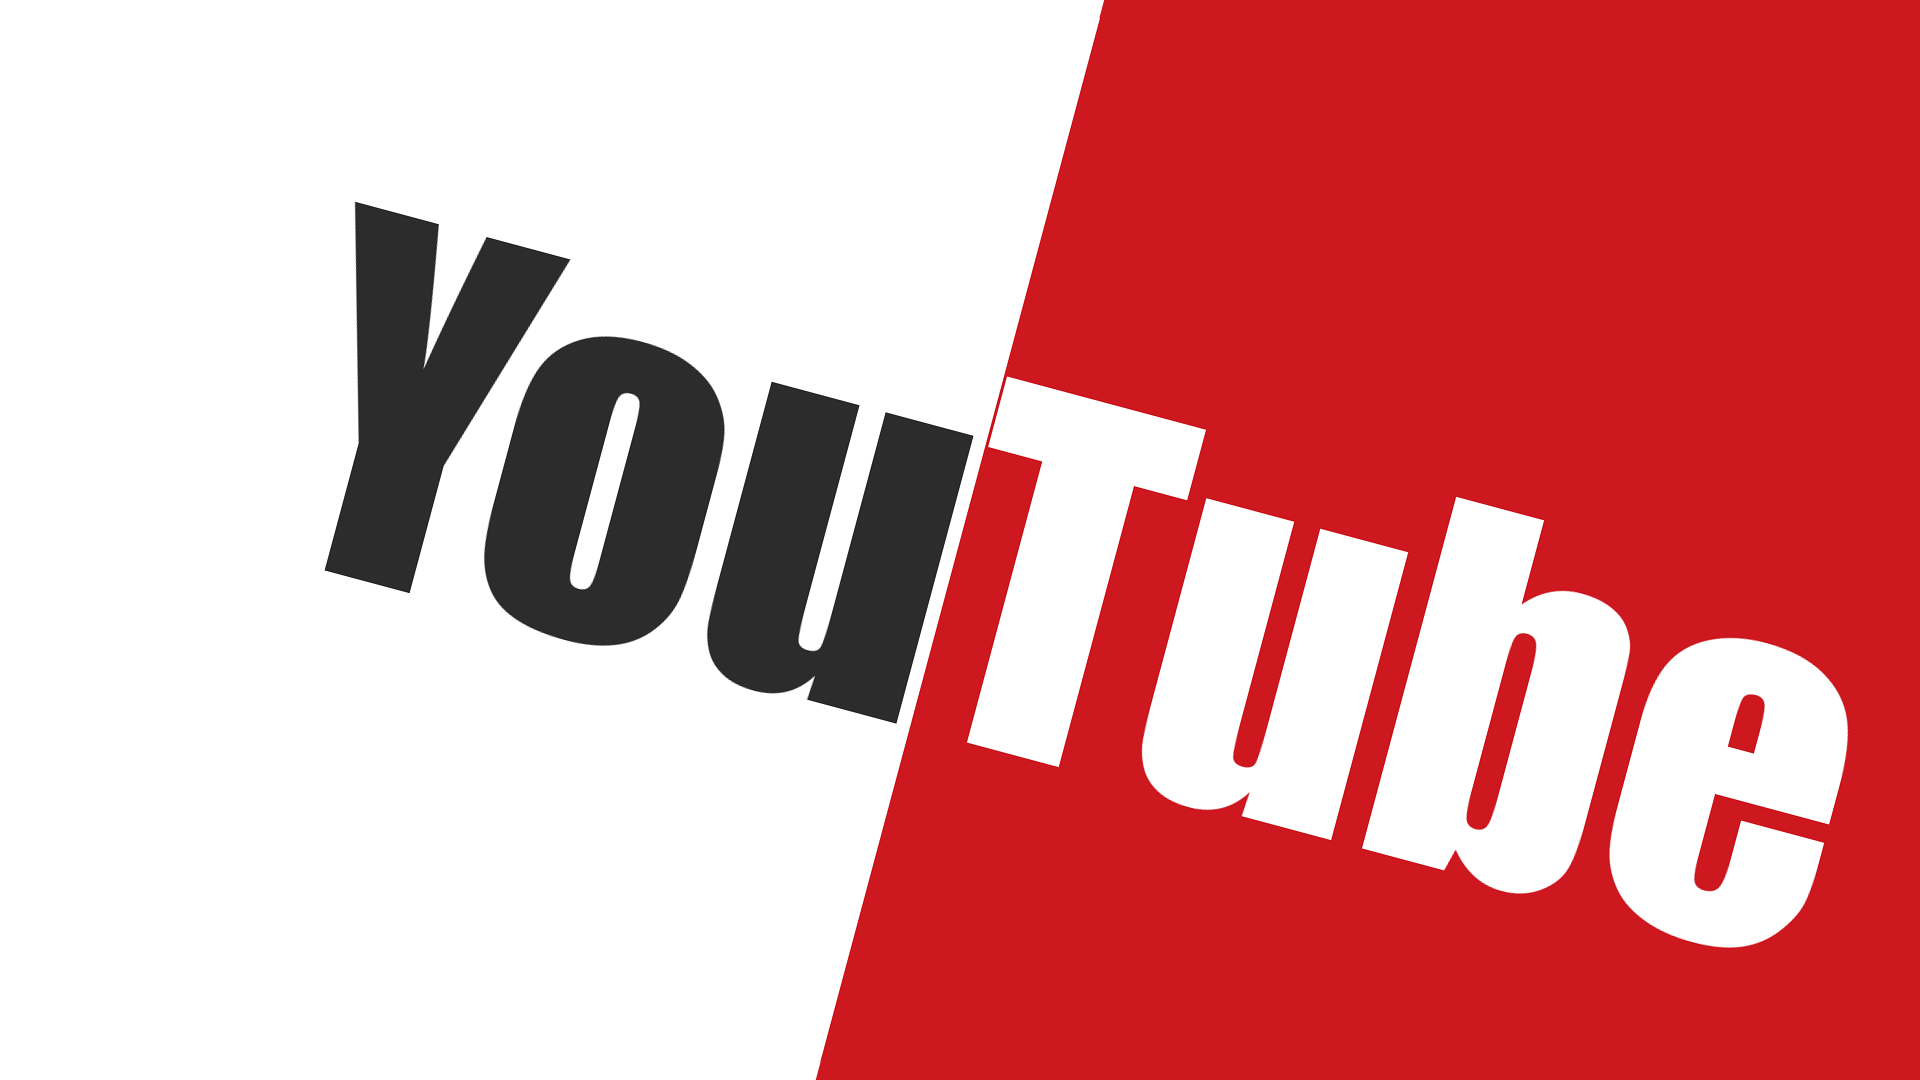 Youtube Logo Wallpapers | PixelsTalk.Net